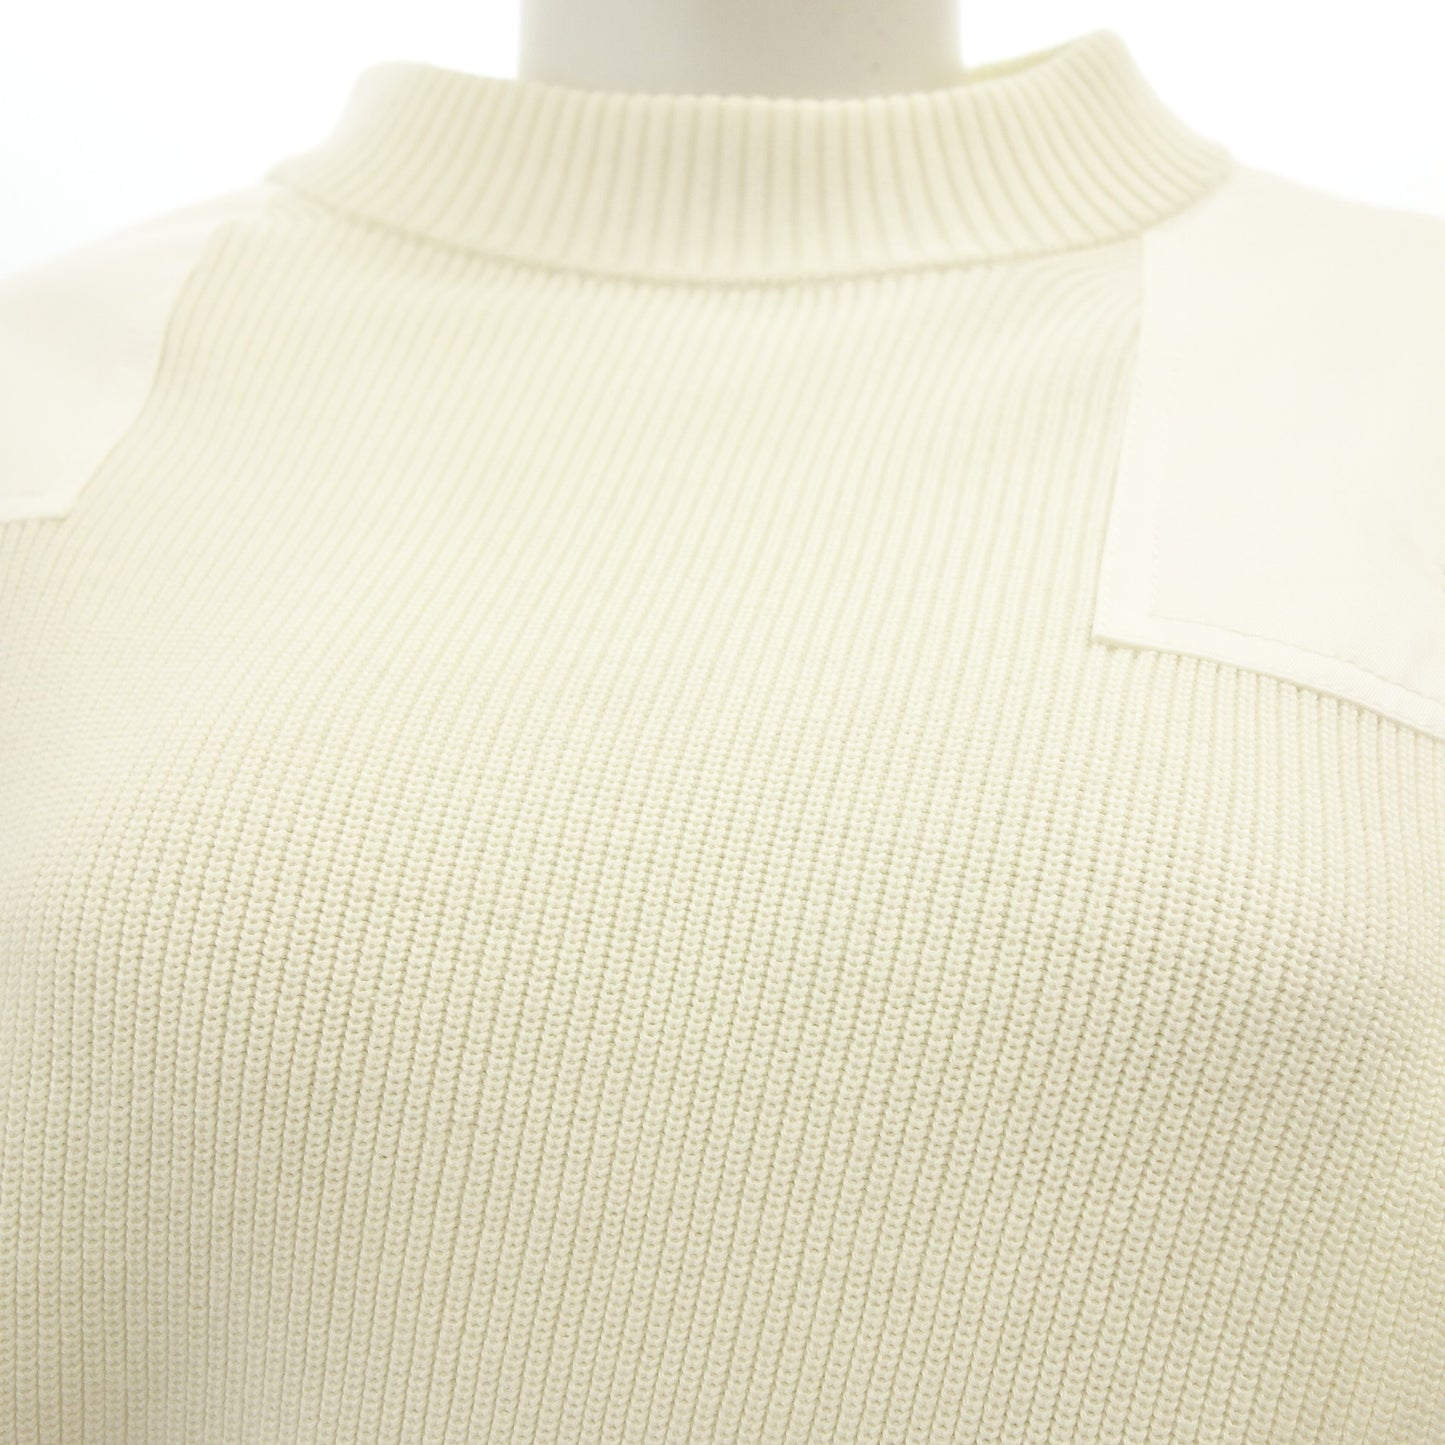 Good Condition◆Sacai Knit Sweater Asymmetric Gold Button Lace 19-04424 White Size 2 Women's Sacai [AFB22] 